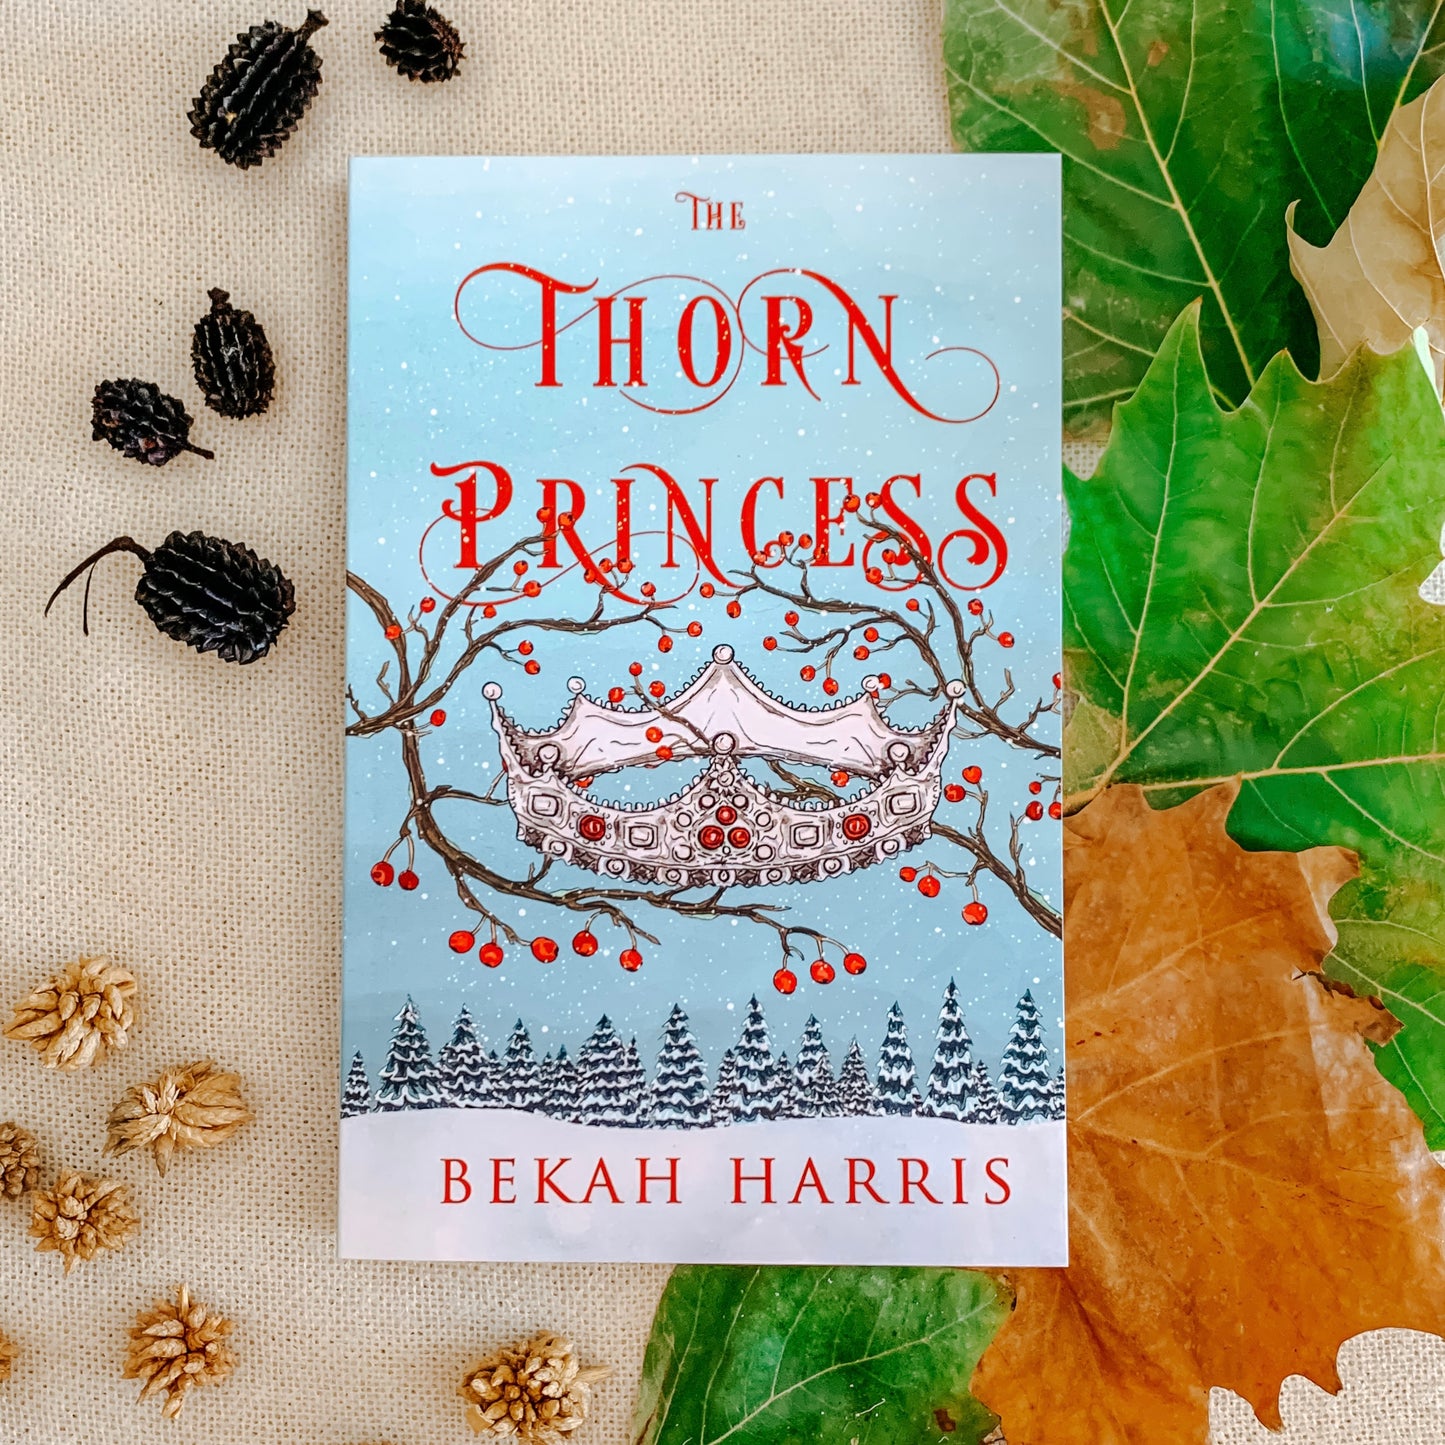 The Thorn Princess by Bekah Harris